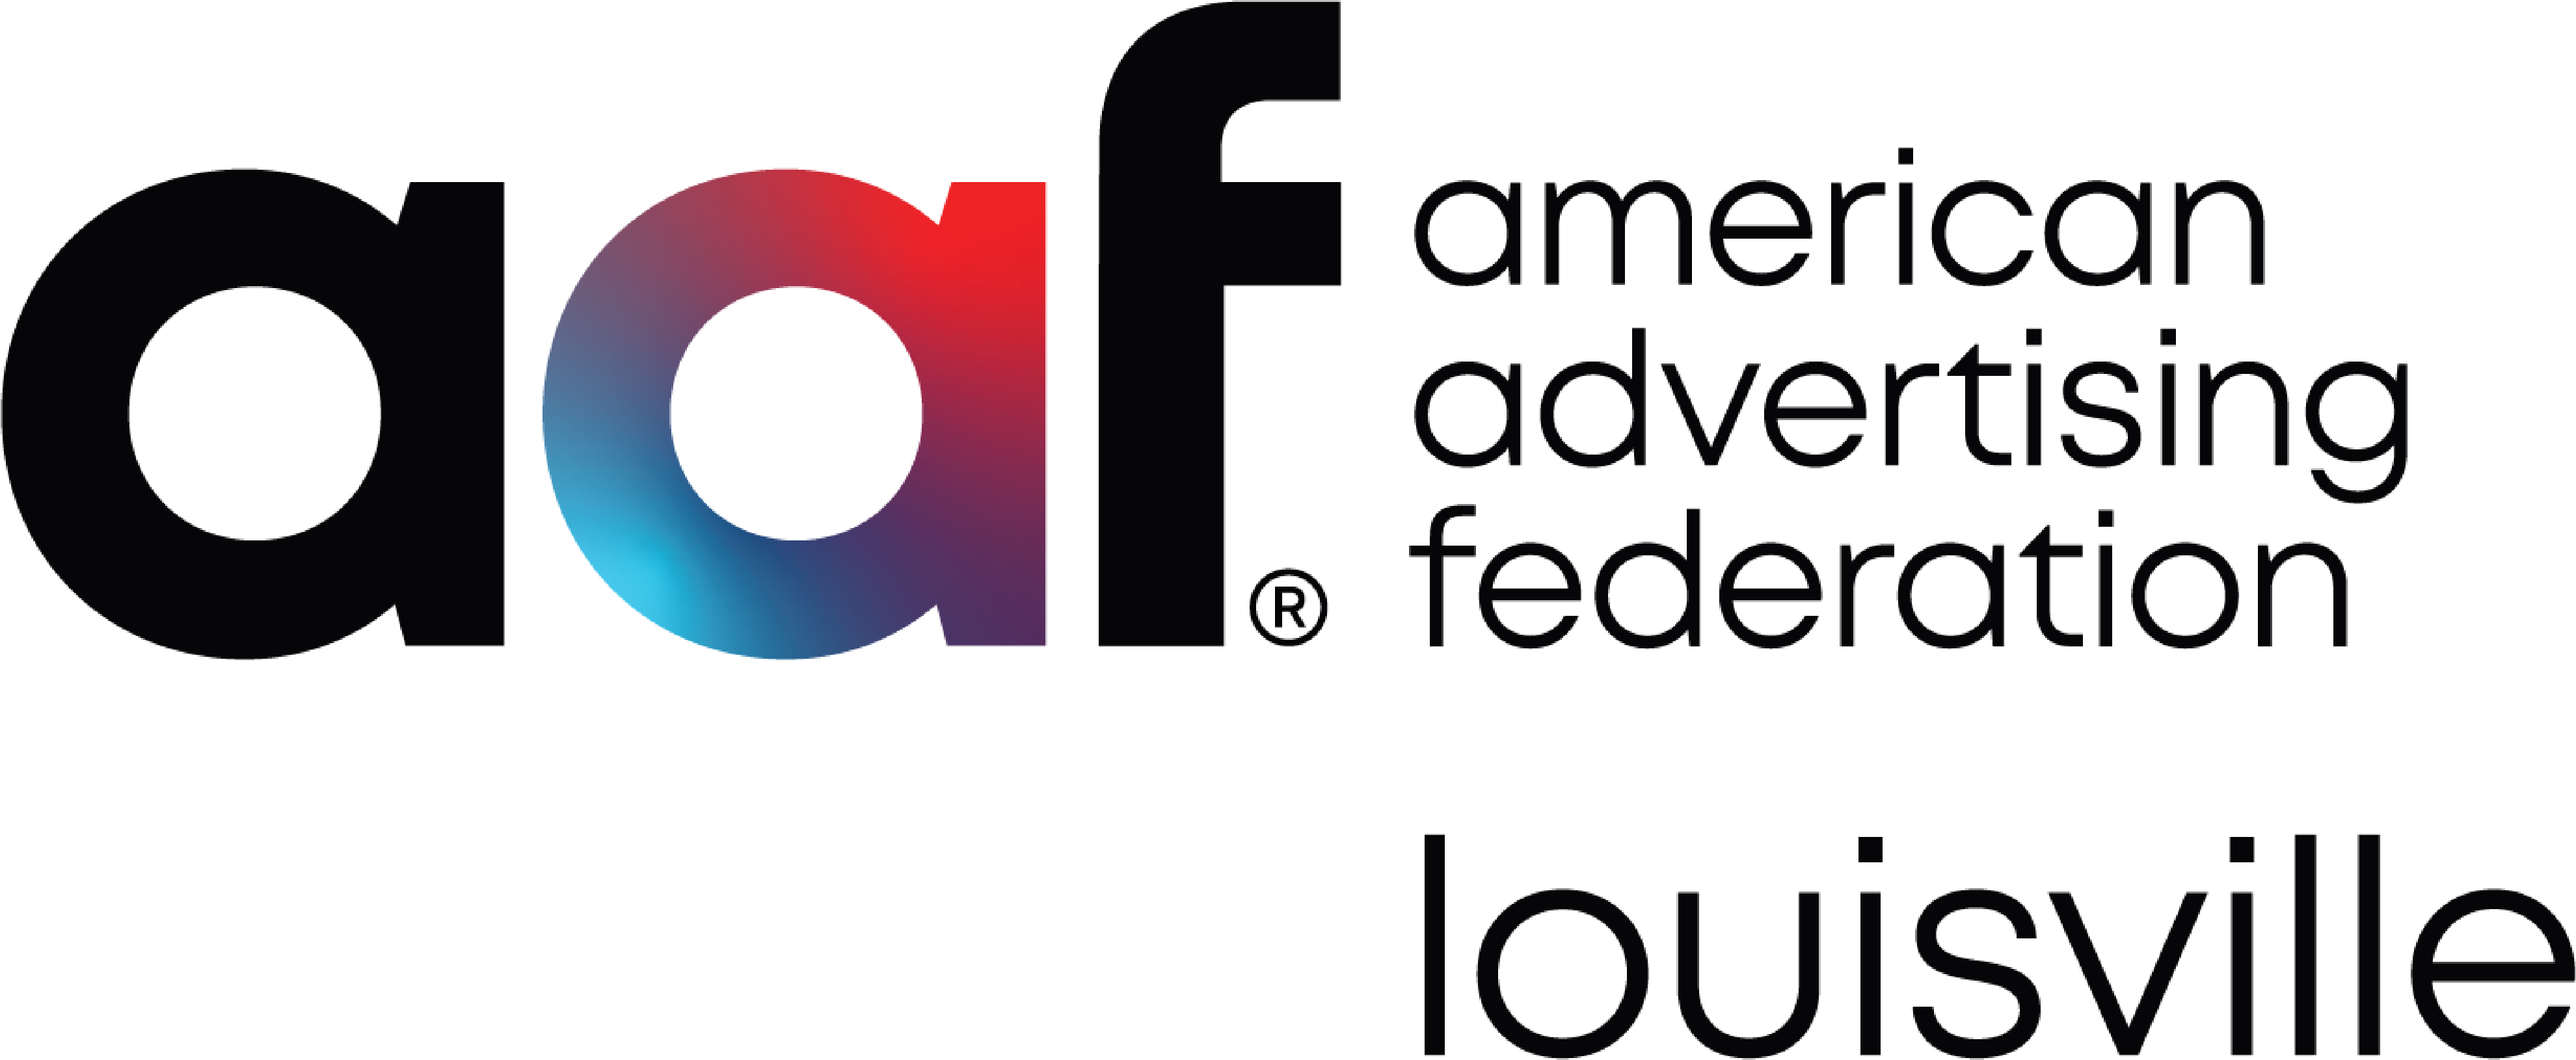 American Advertising Federation - Louisville logo